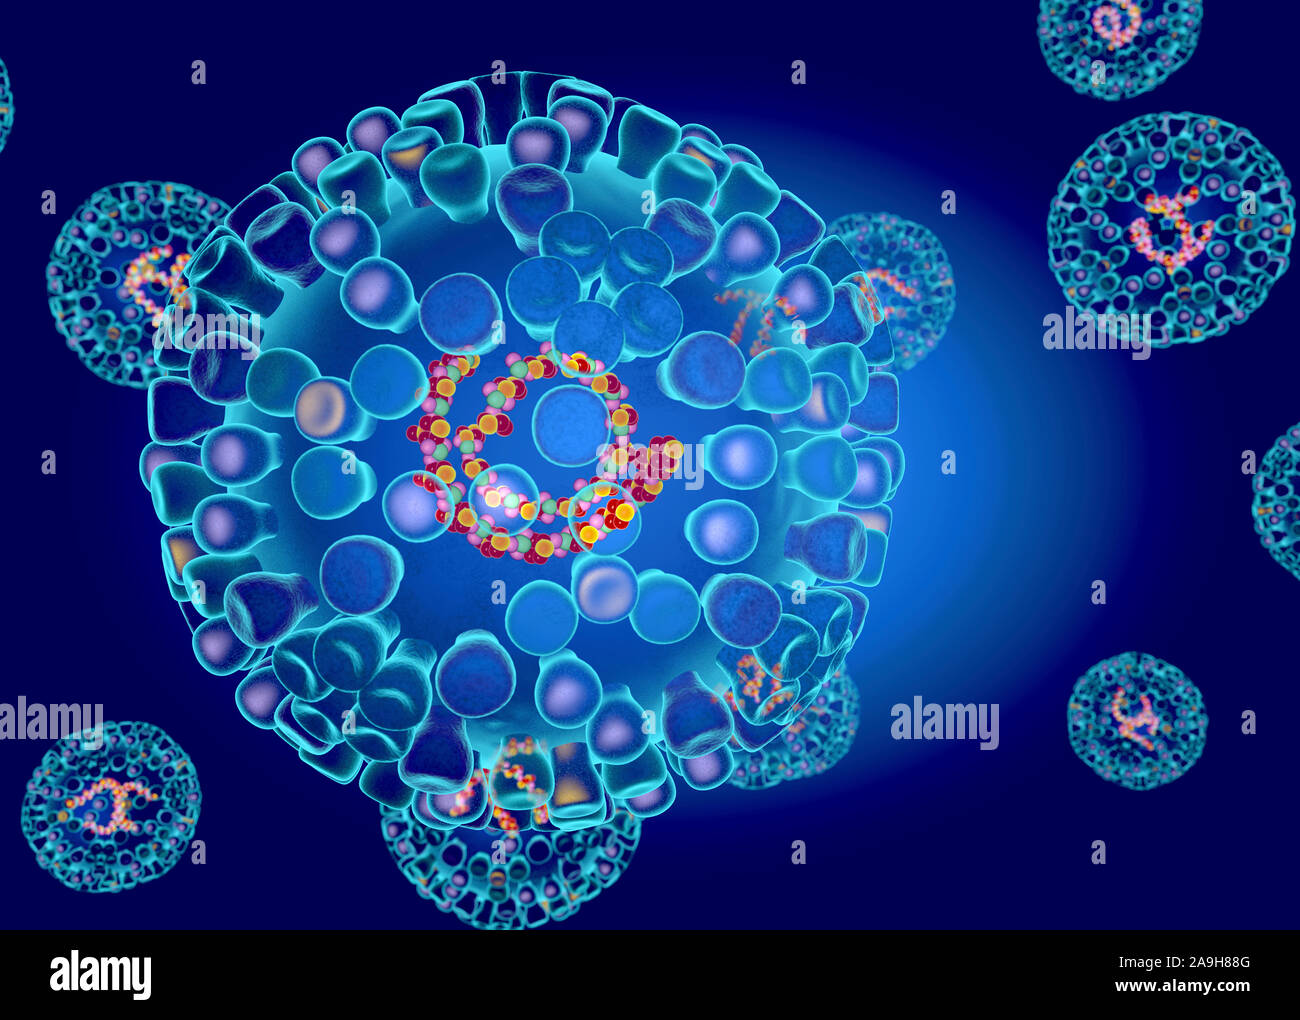 Bluetongue virus structure, illustration Stock Photo